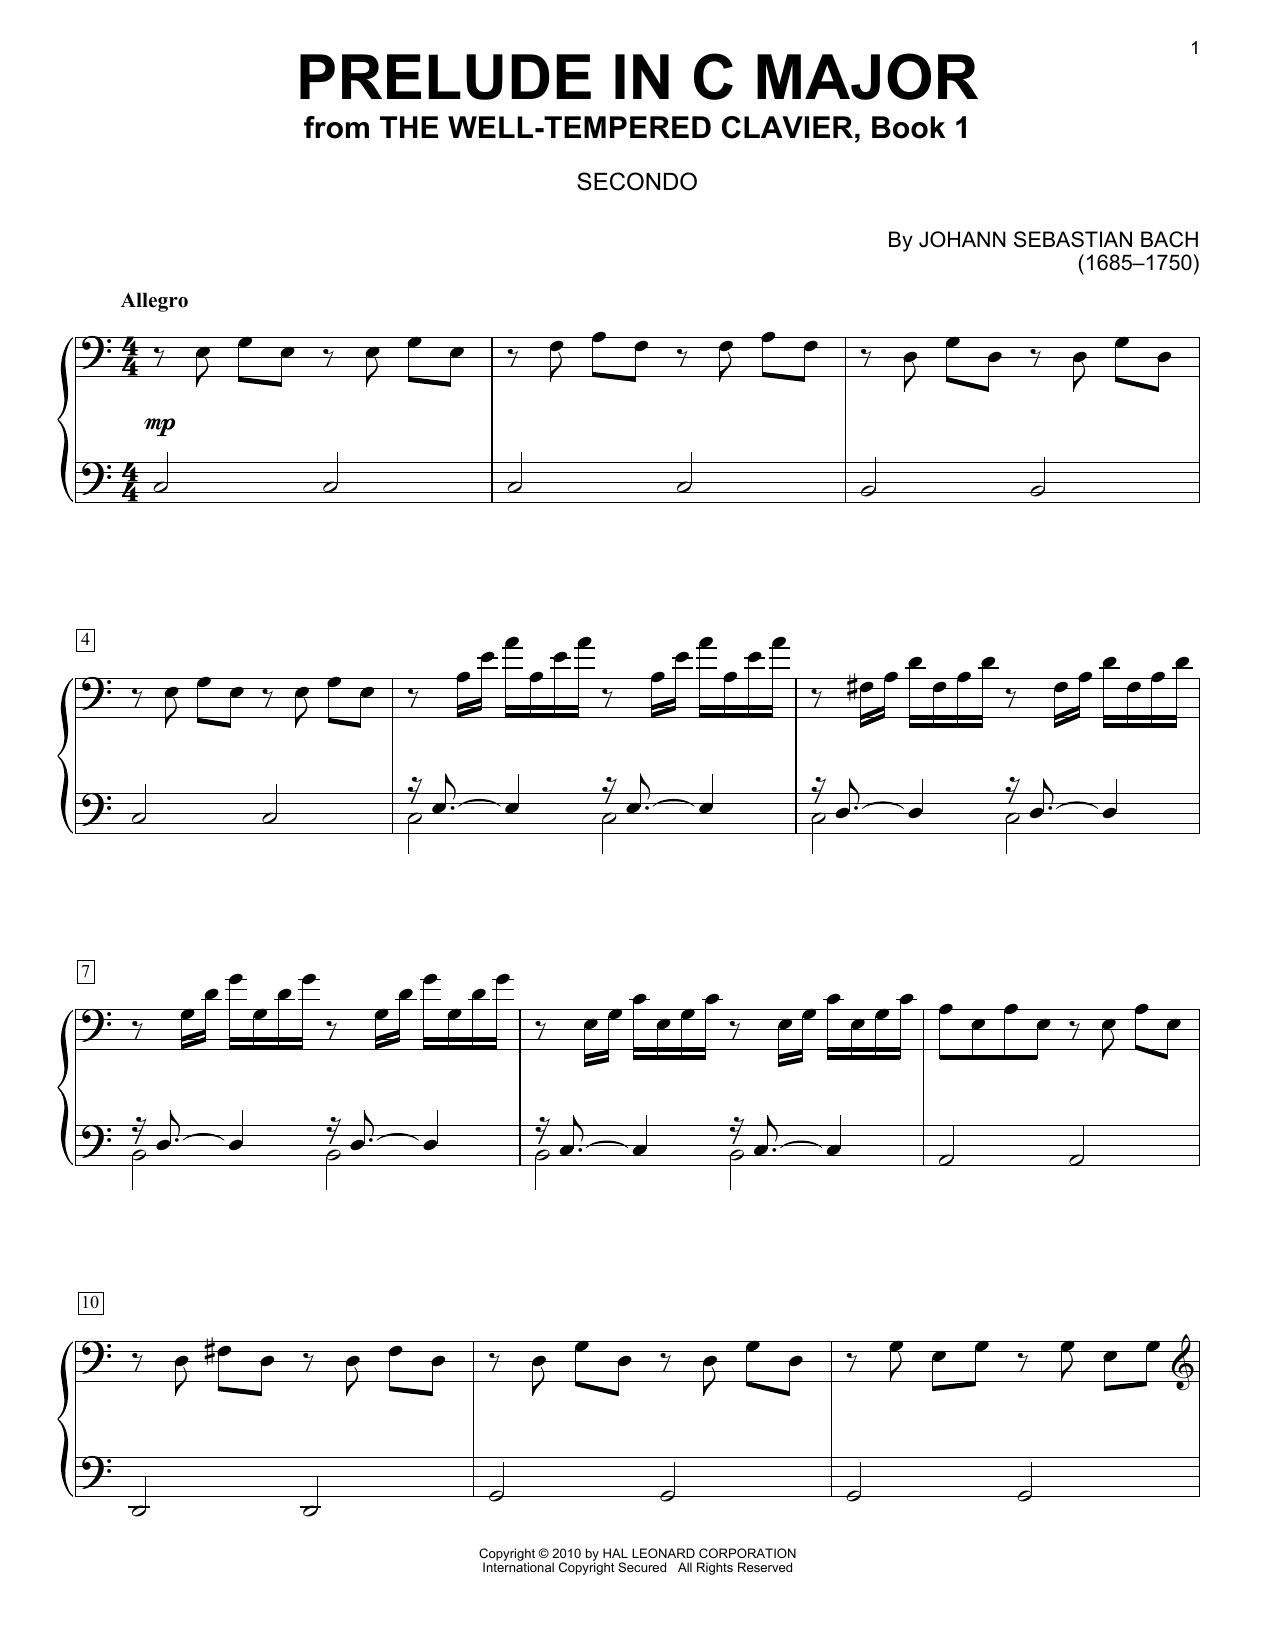 Johann Sebastian Bach Prelude In C Major Sheet Music Notes & Chords for Easy Guitar Tab - Download or Print PDF